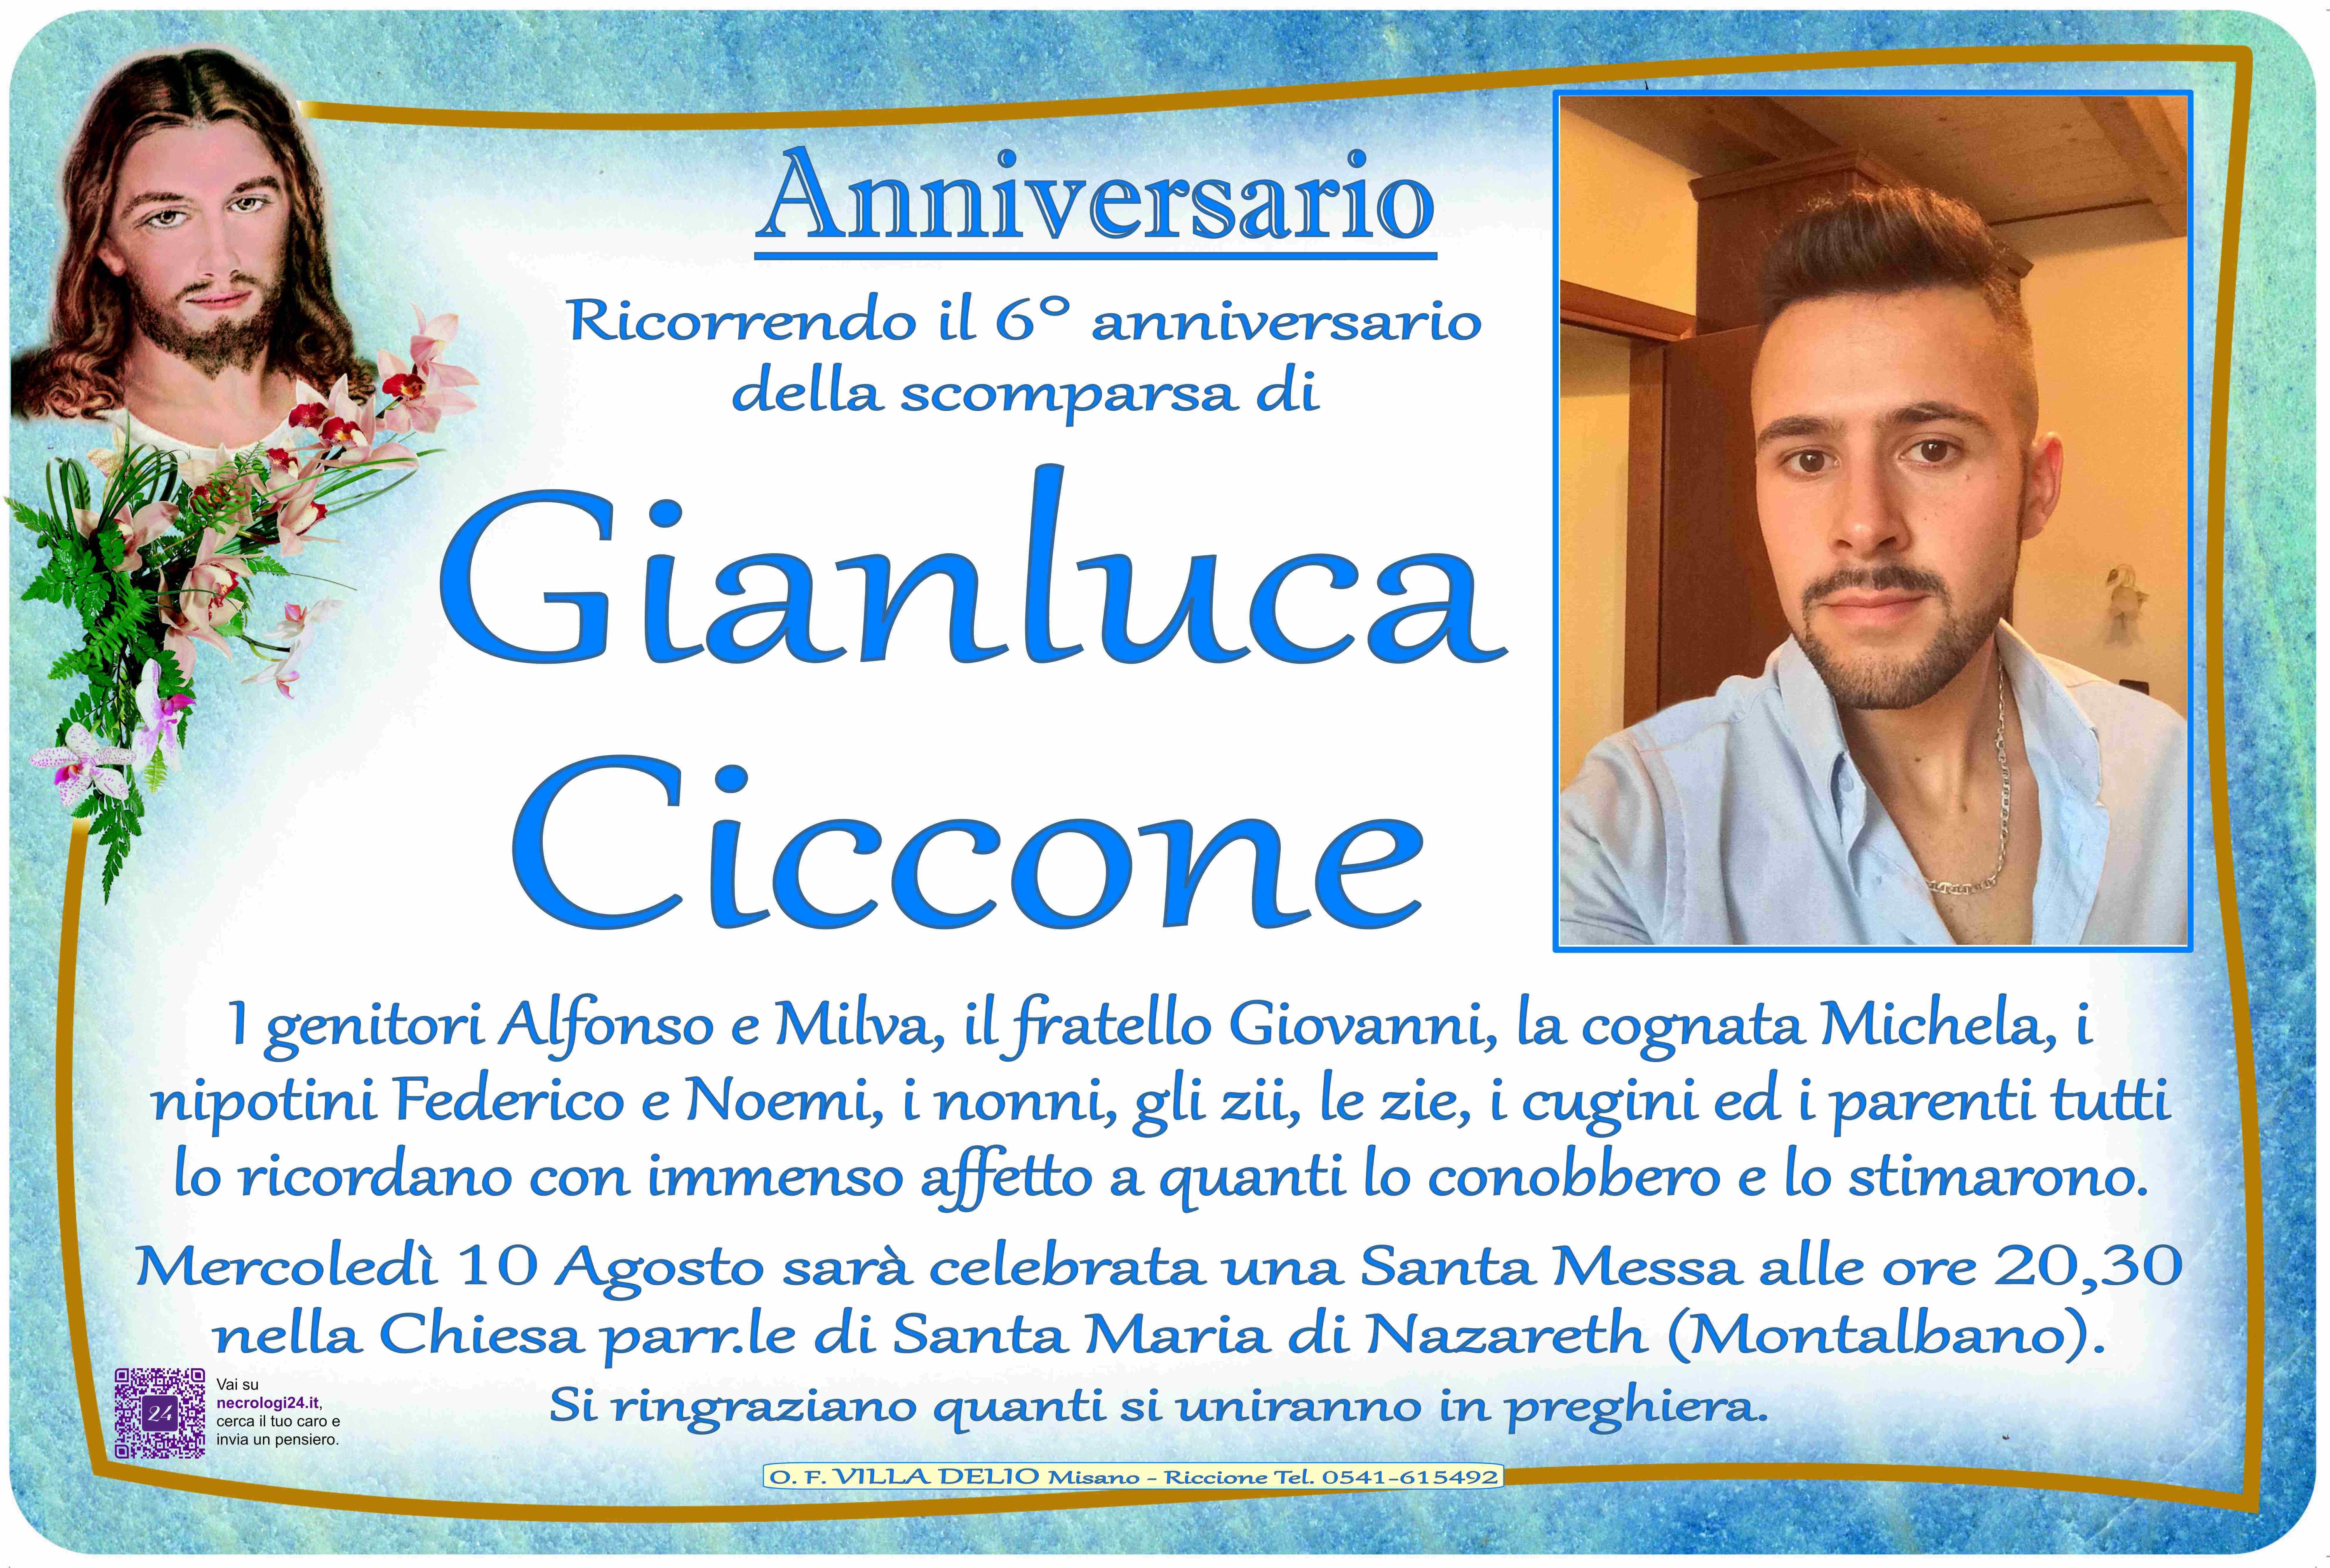 Gianluca Ciccone